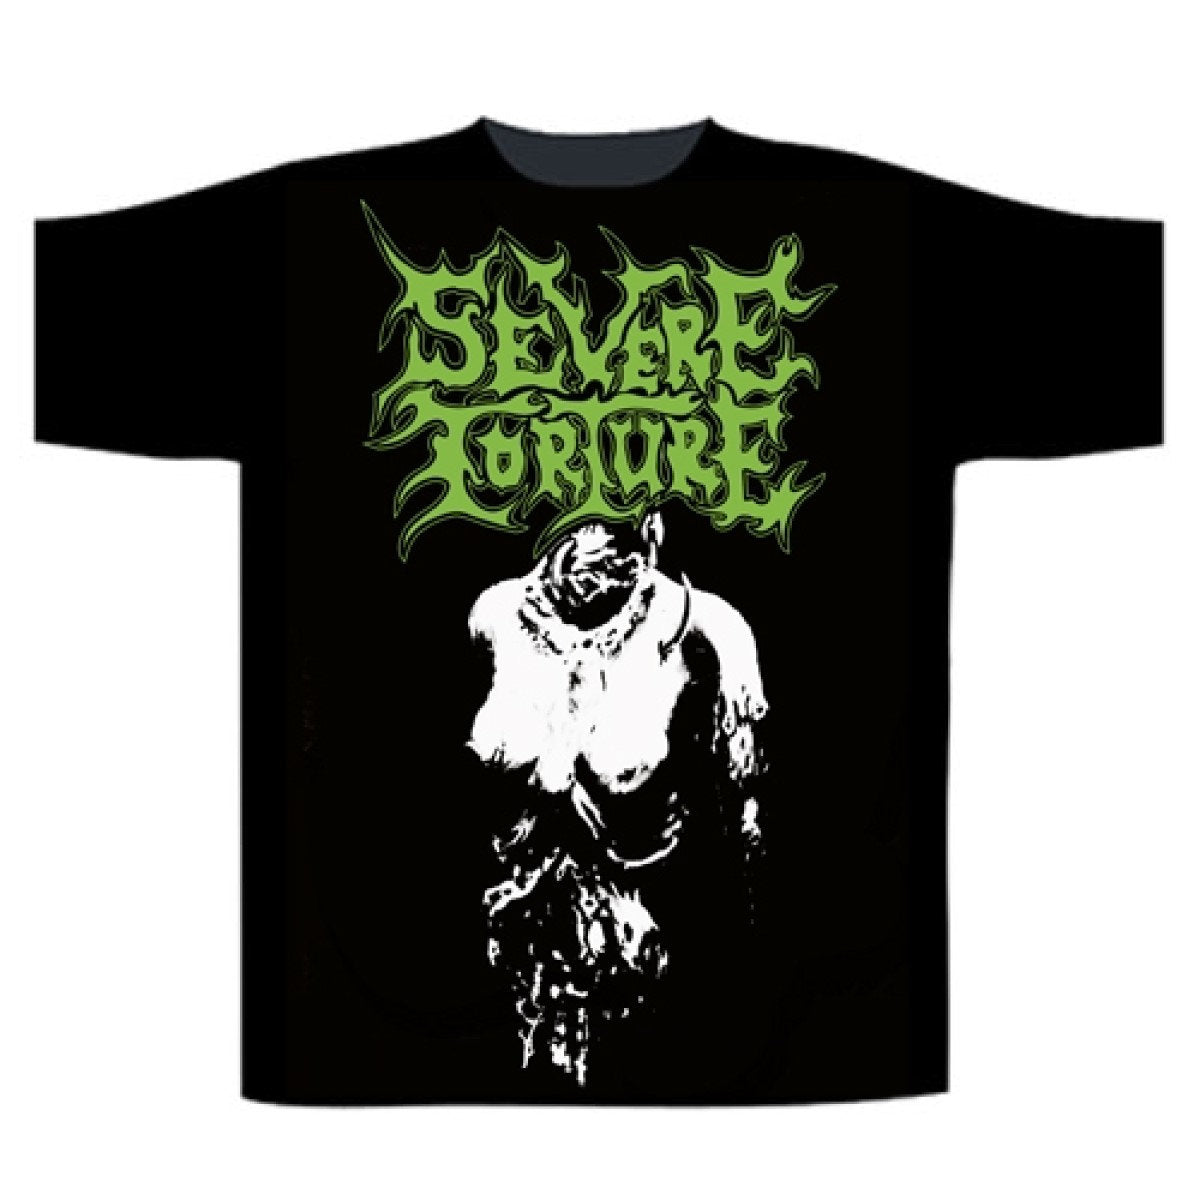 Severe Torture "Corpse" T shirt